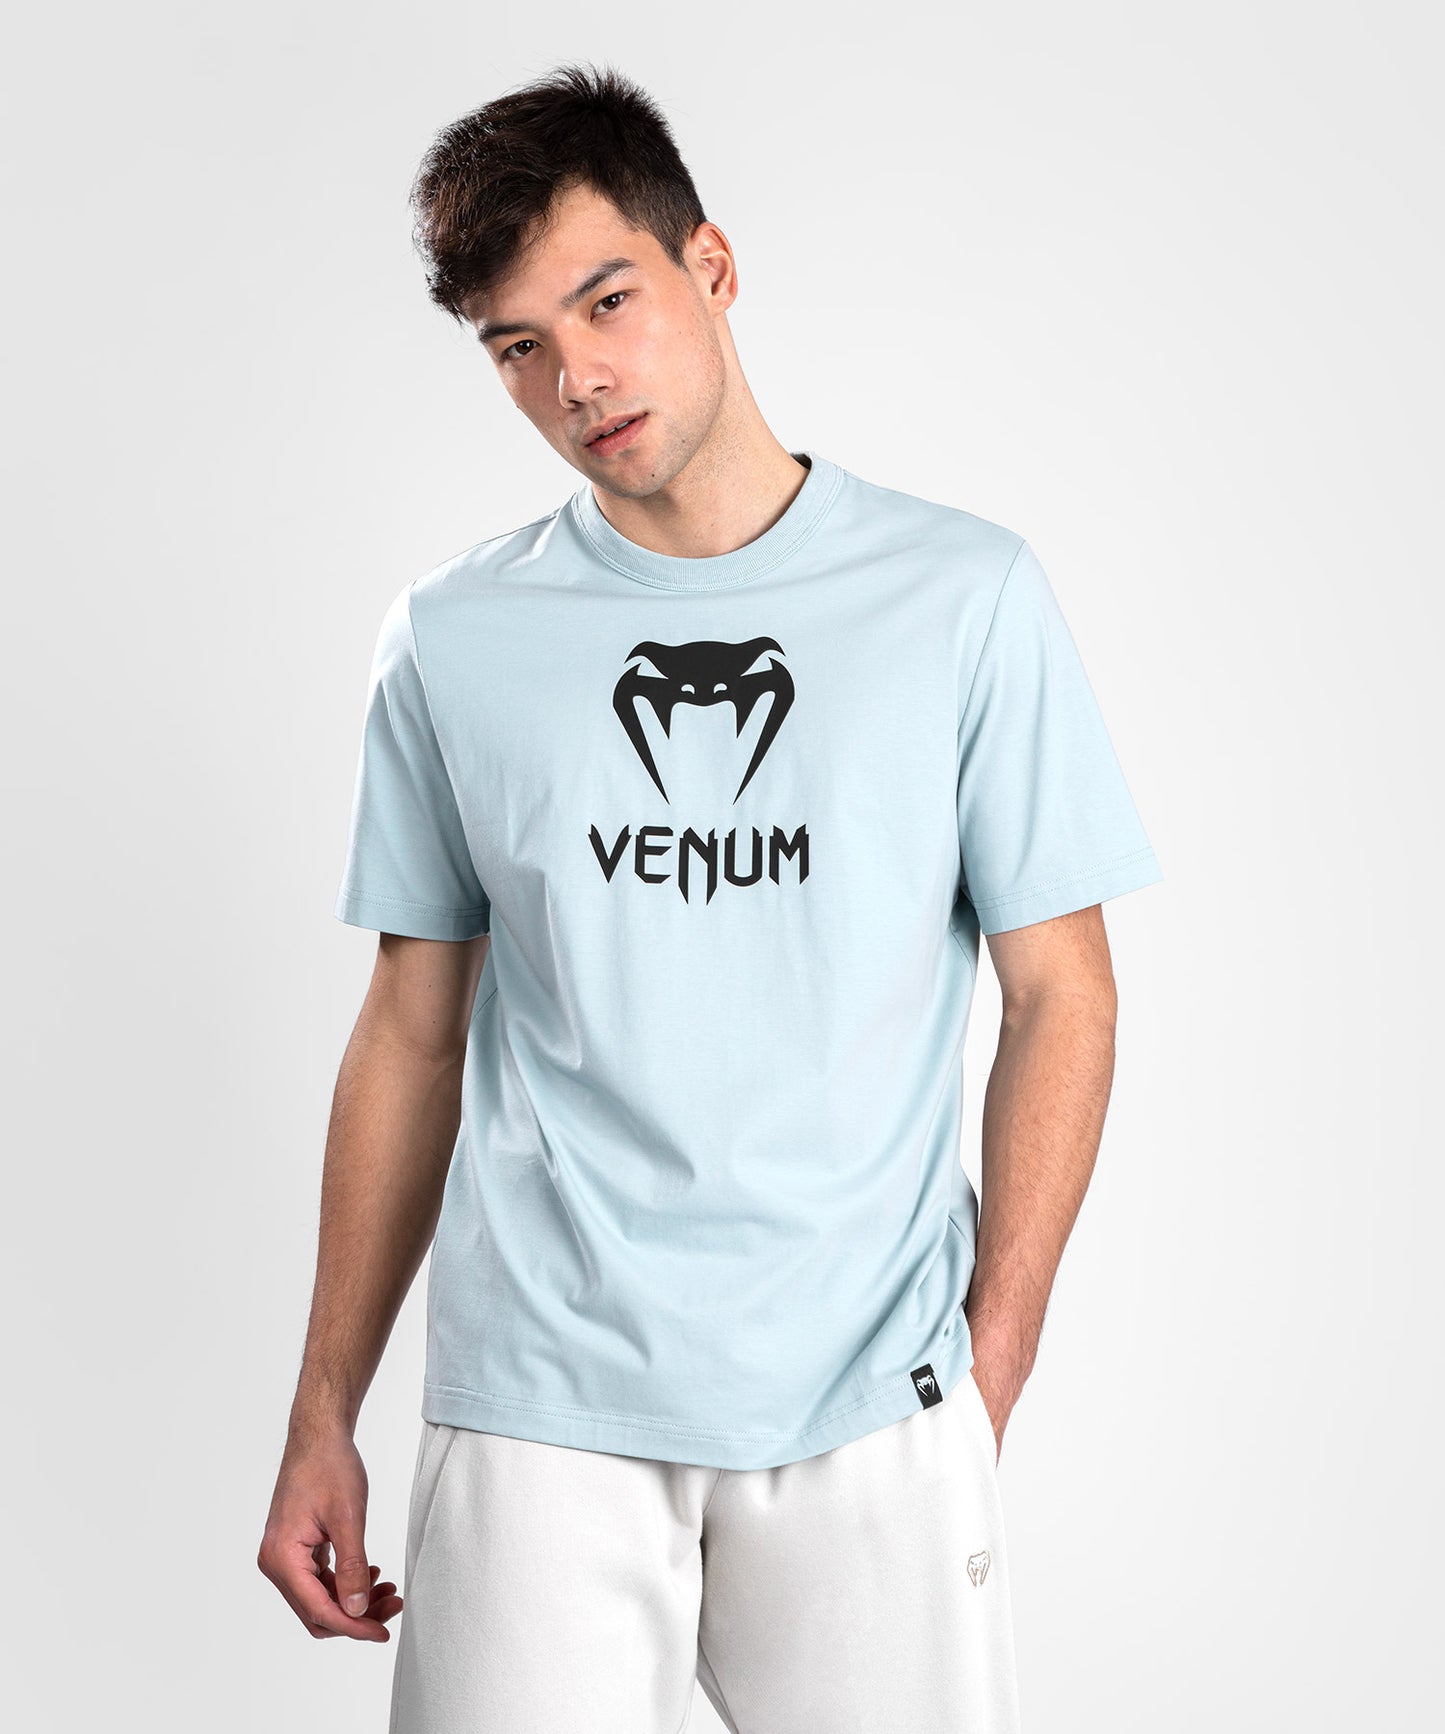 Venum Classic T-Shirt - Clearwater/Black